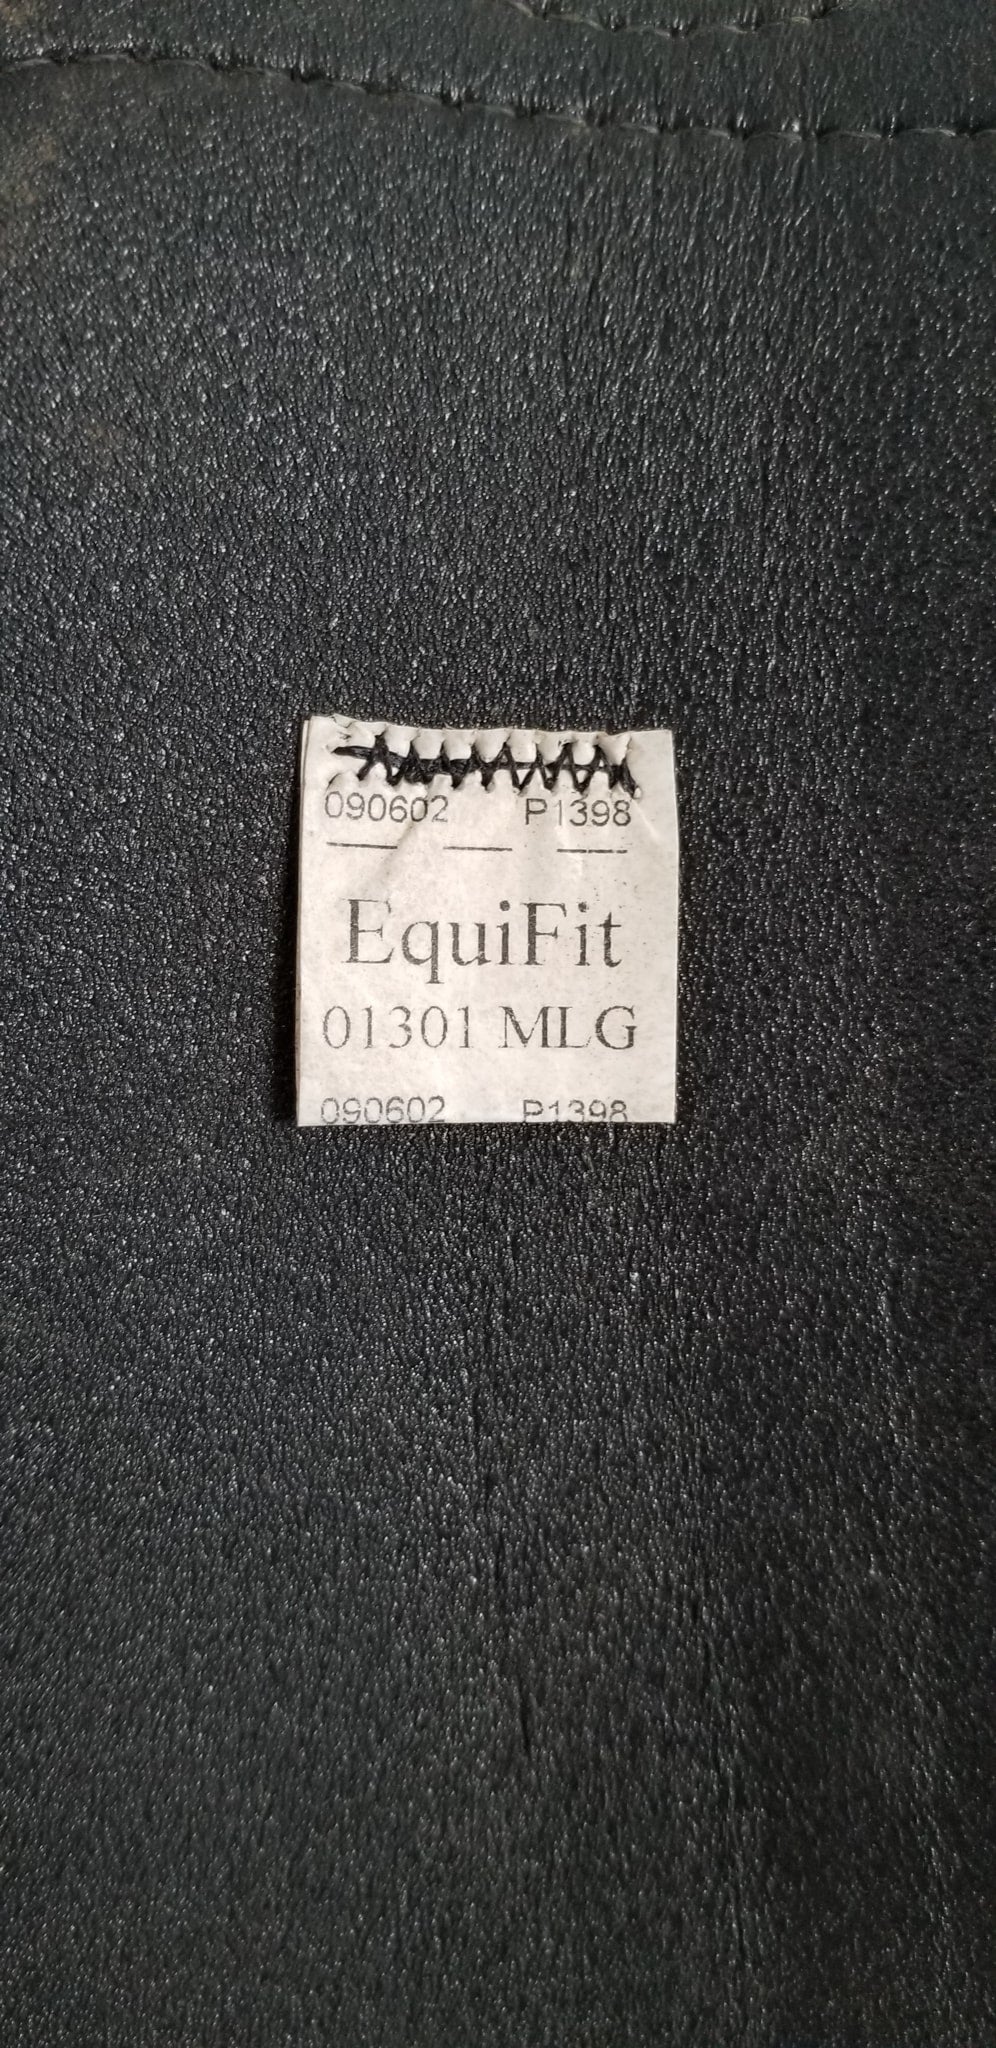 EquiFit Front Boots - Black - Medium/Large